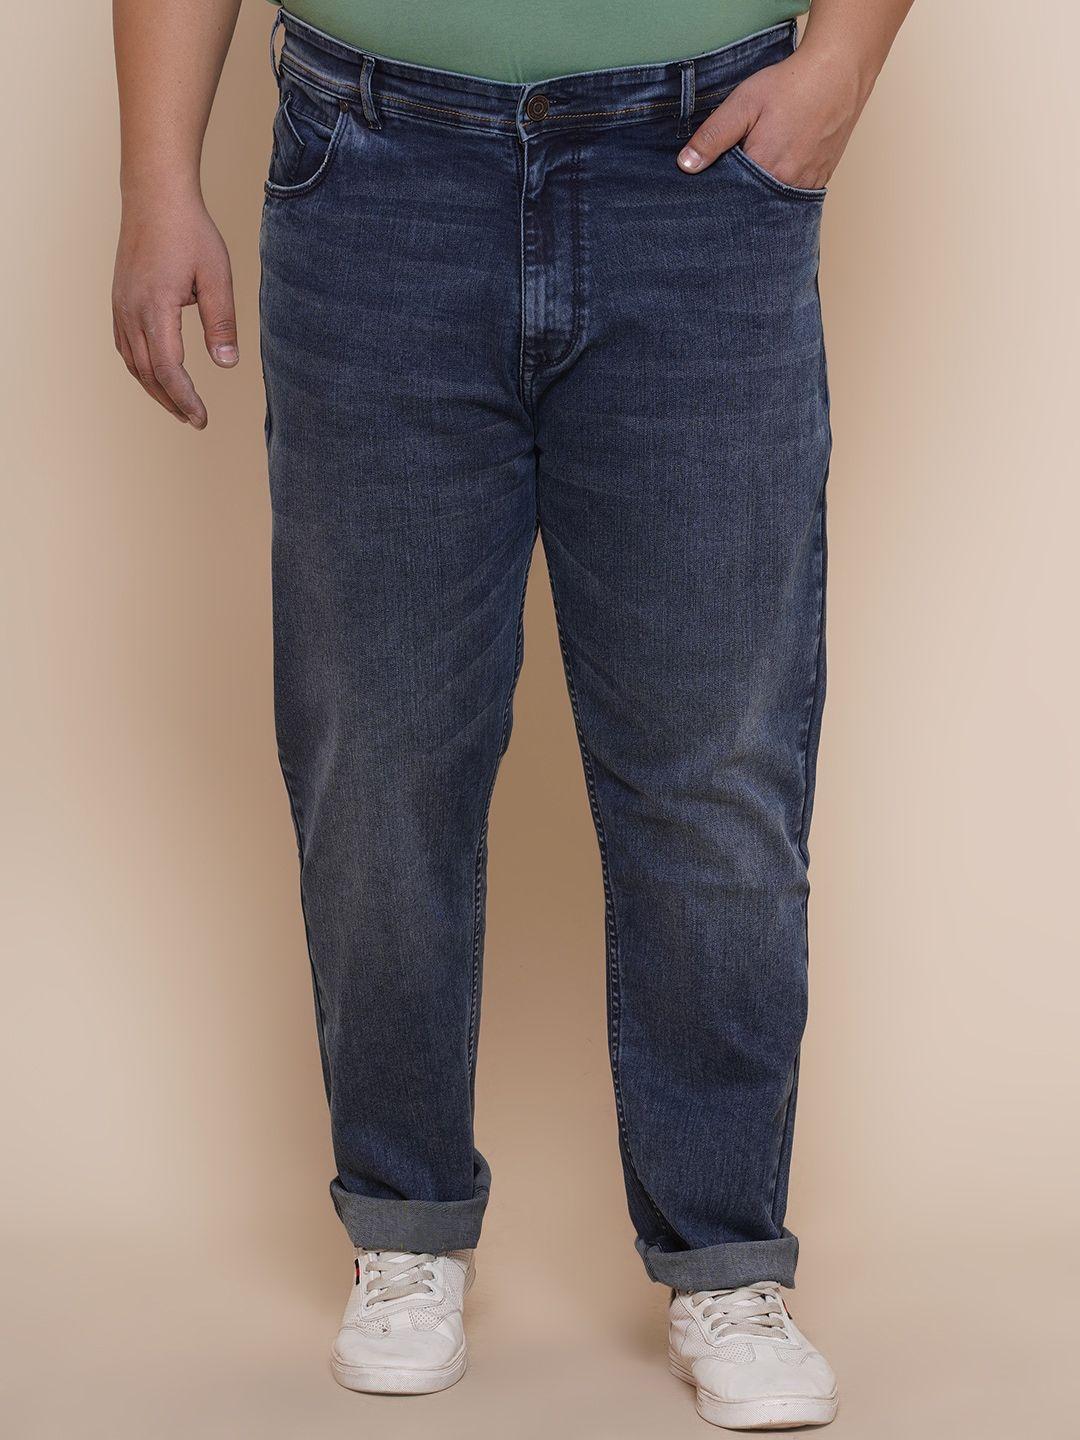 john pride men plus size cotton light fade stretchable jeans